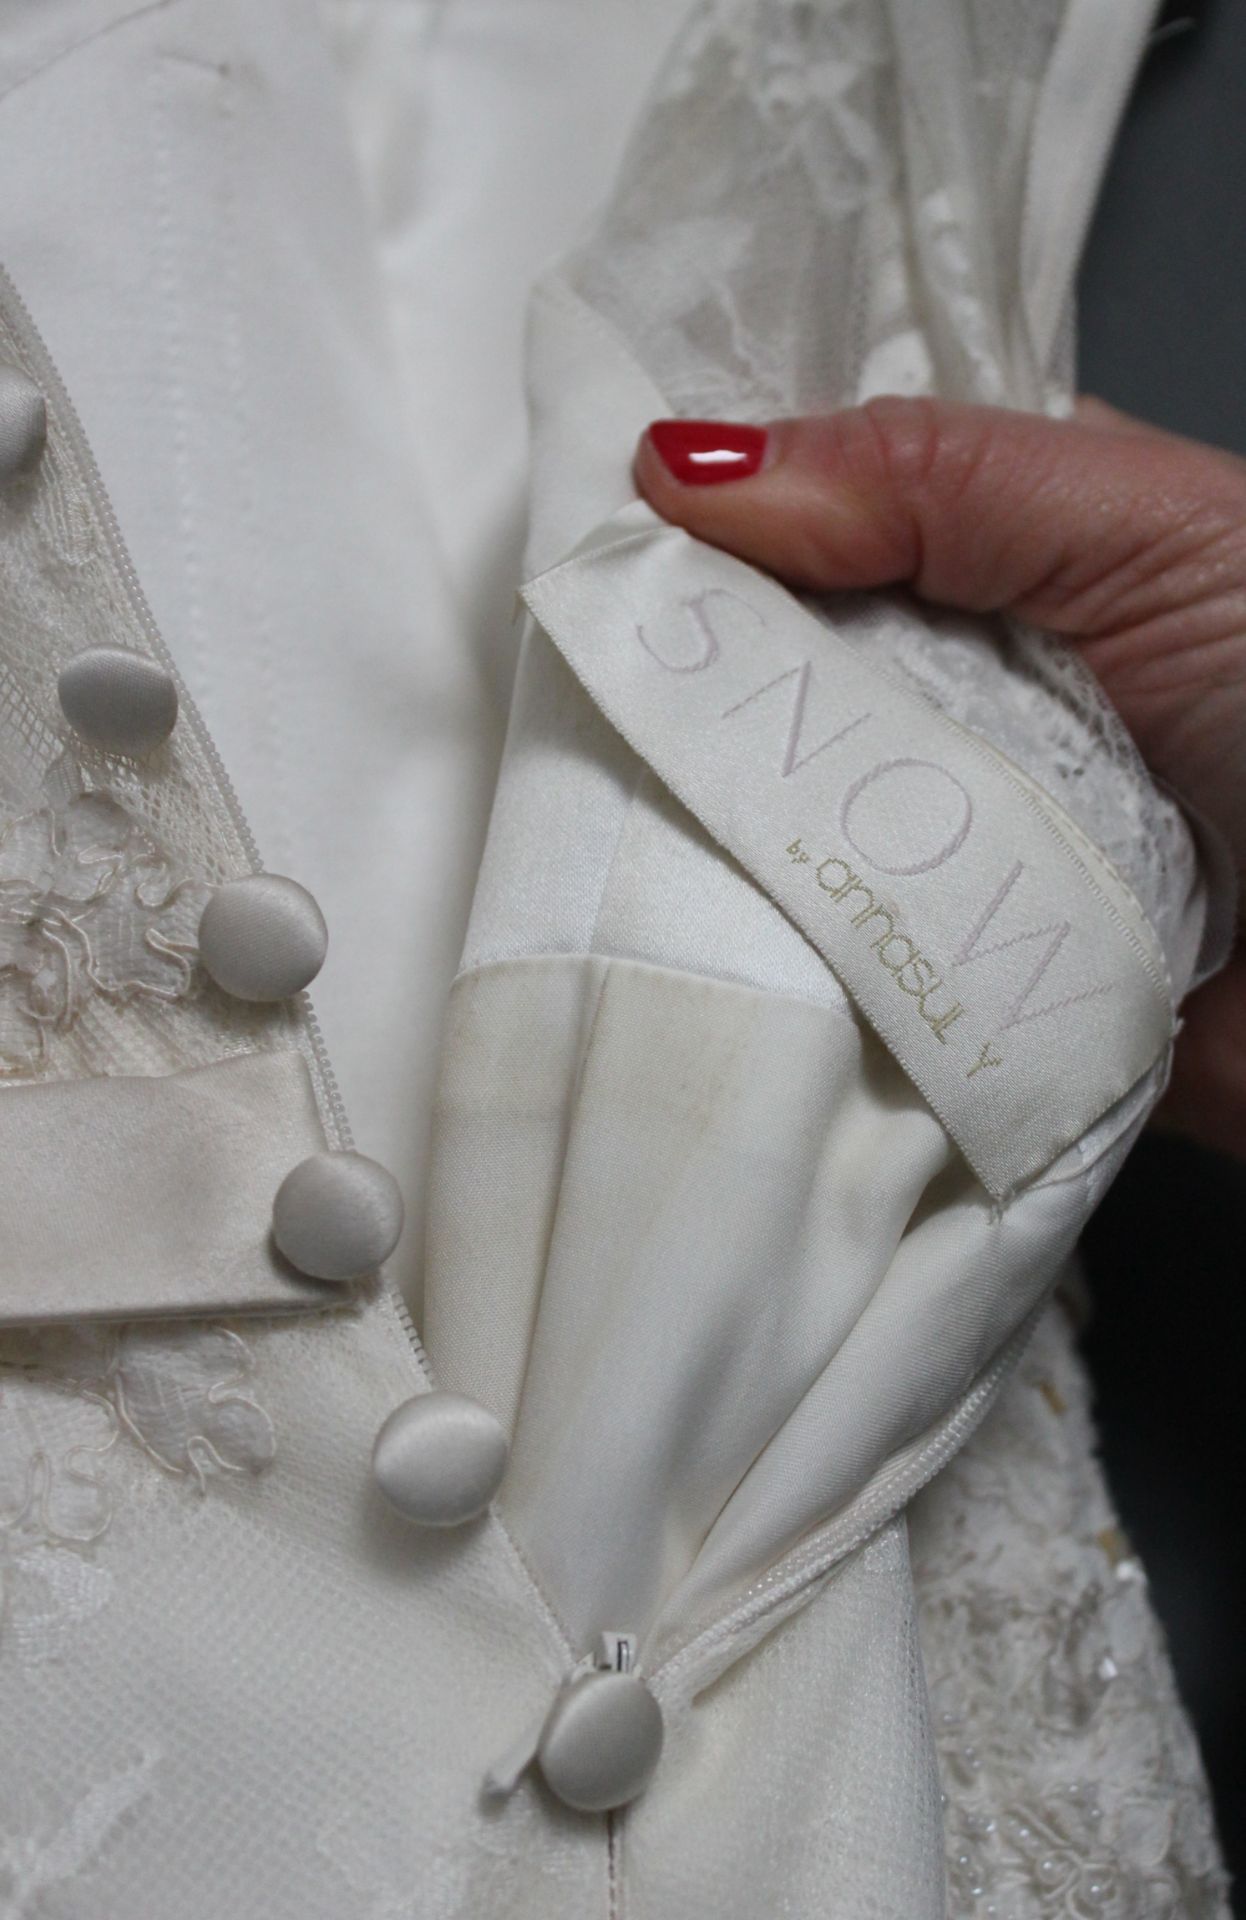 1 x LUSAN MANDONGUS/ ANNASUL Y Lace Overlay Full Skirt Designer Wedding Dress RRP £1,500 UK14 - Image 7 of 7